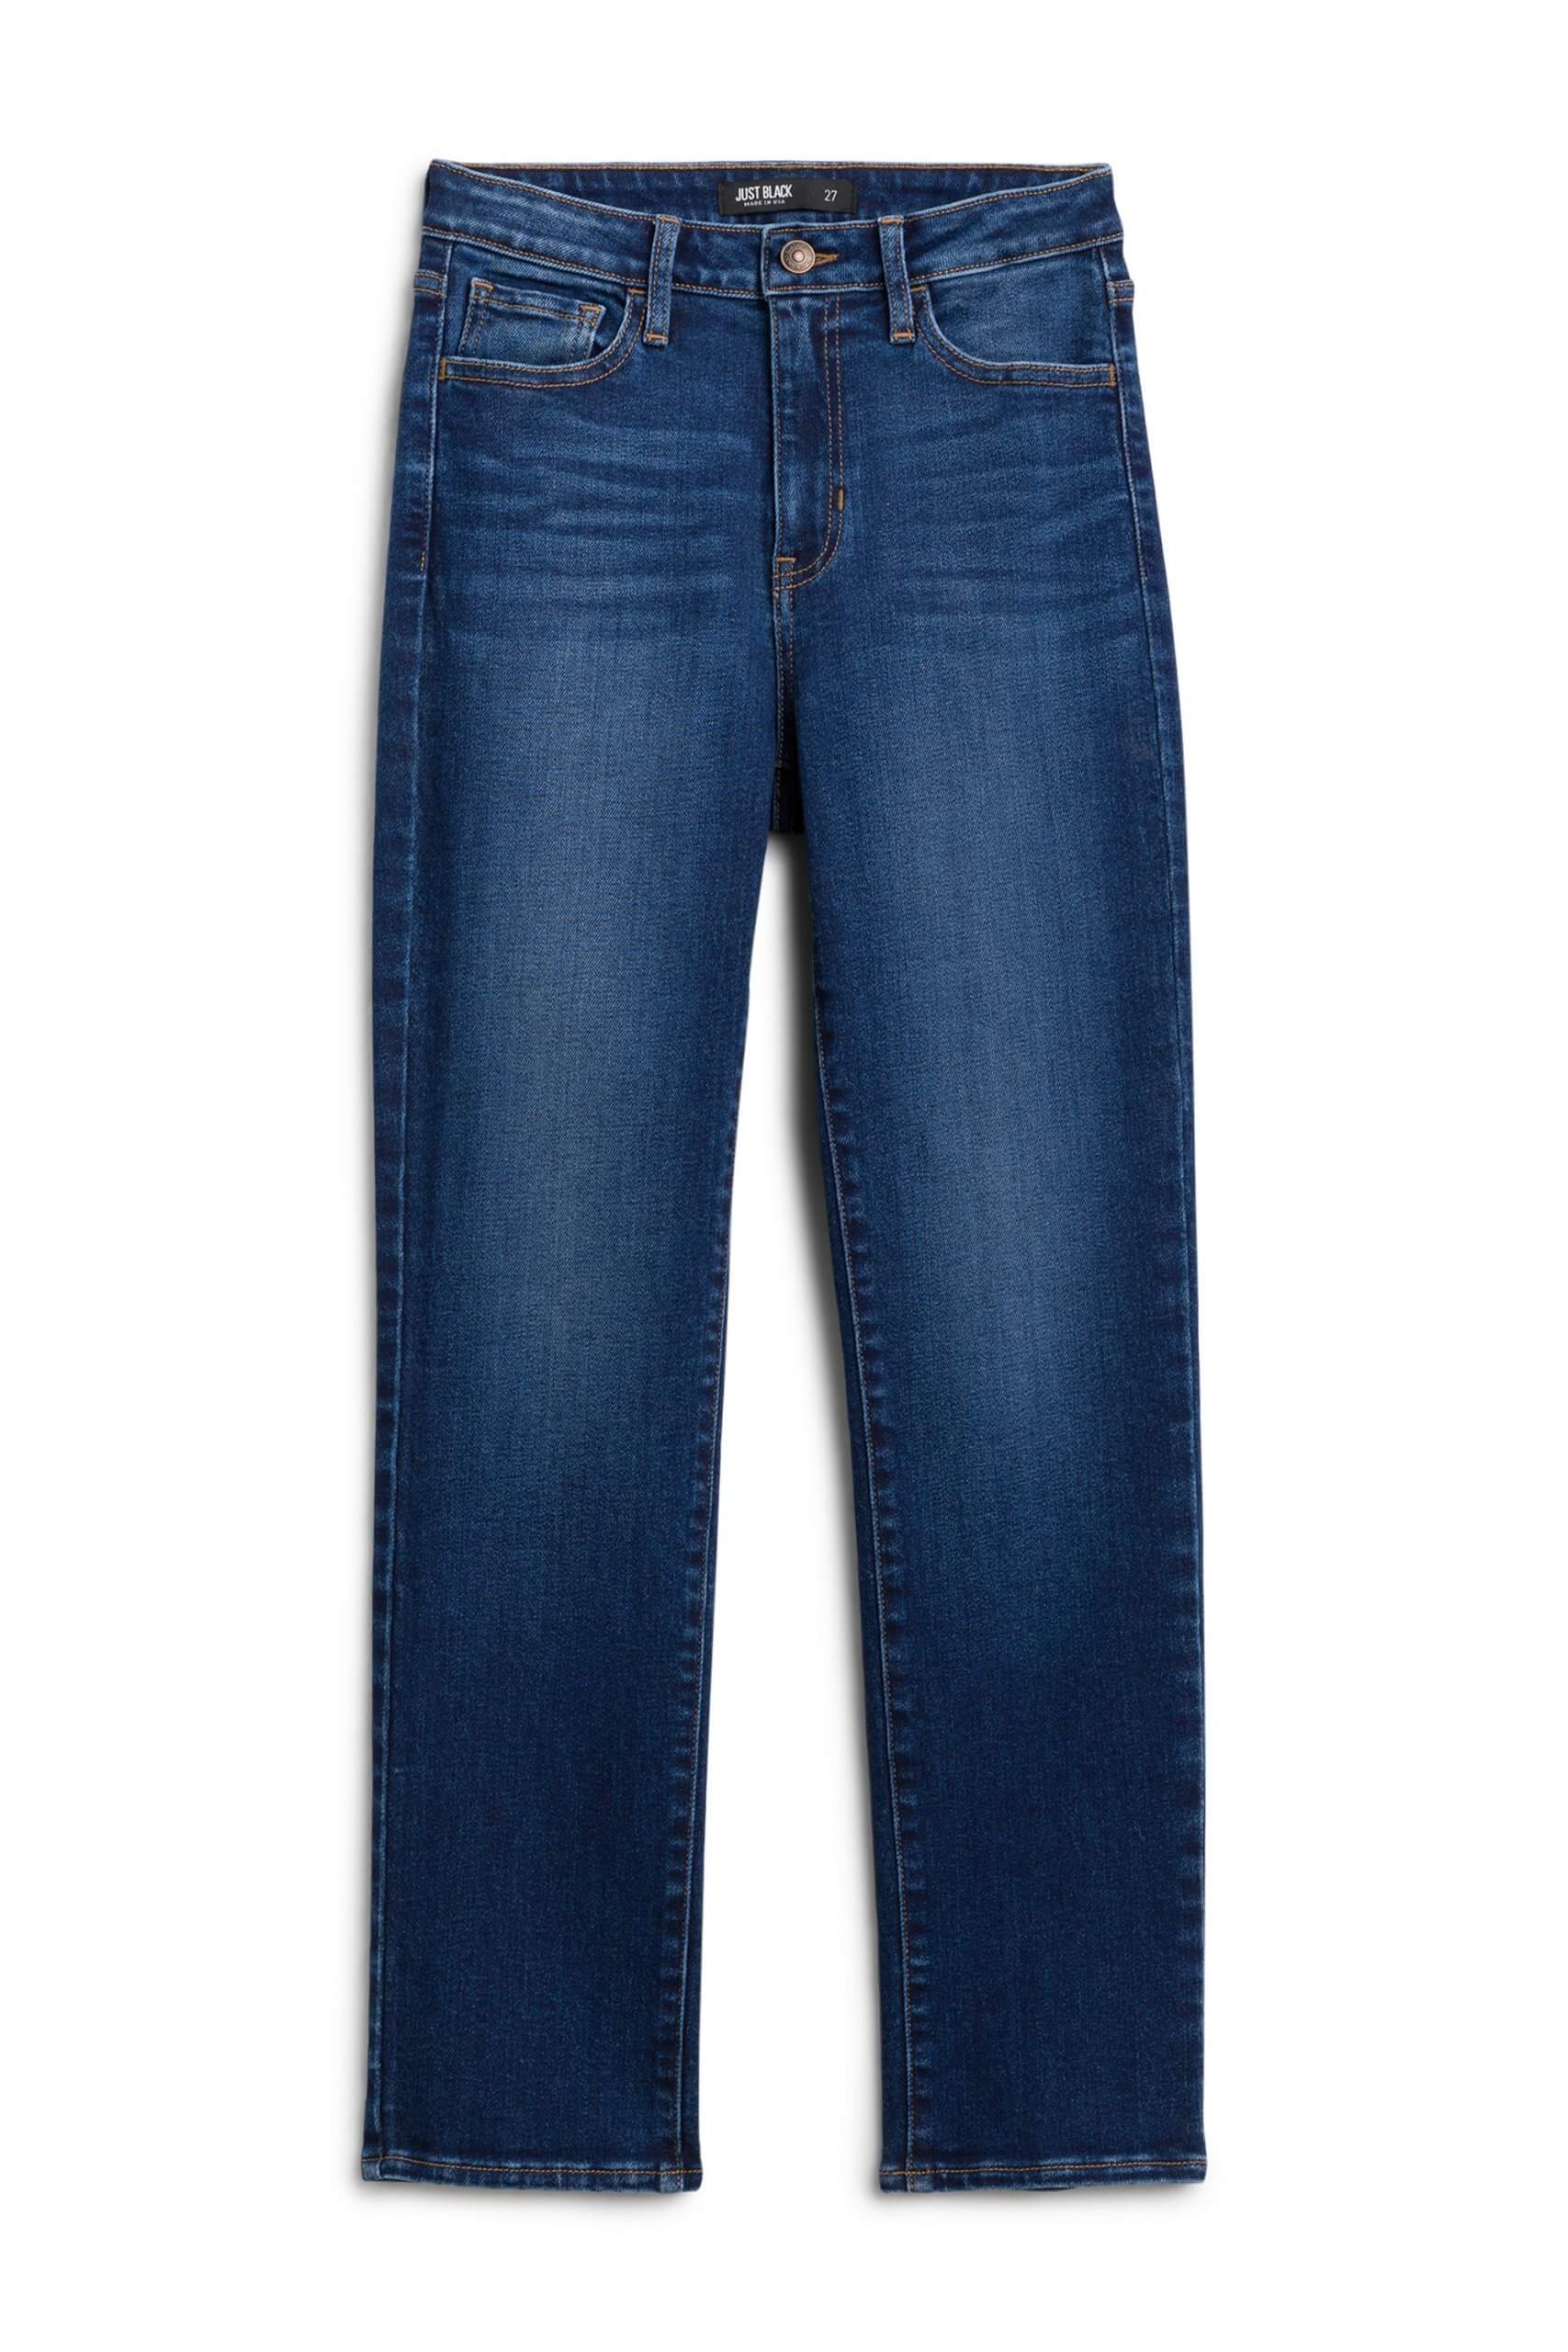 Stitch Fix Women's blue straight-fit jeans.